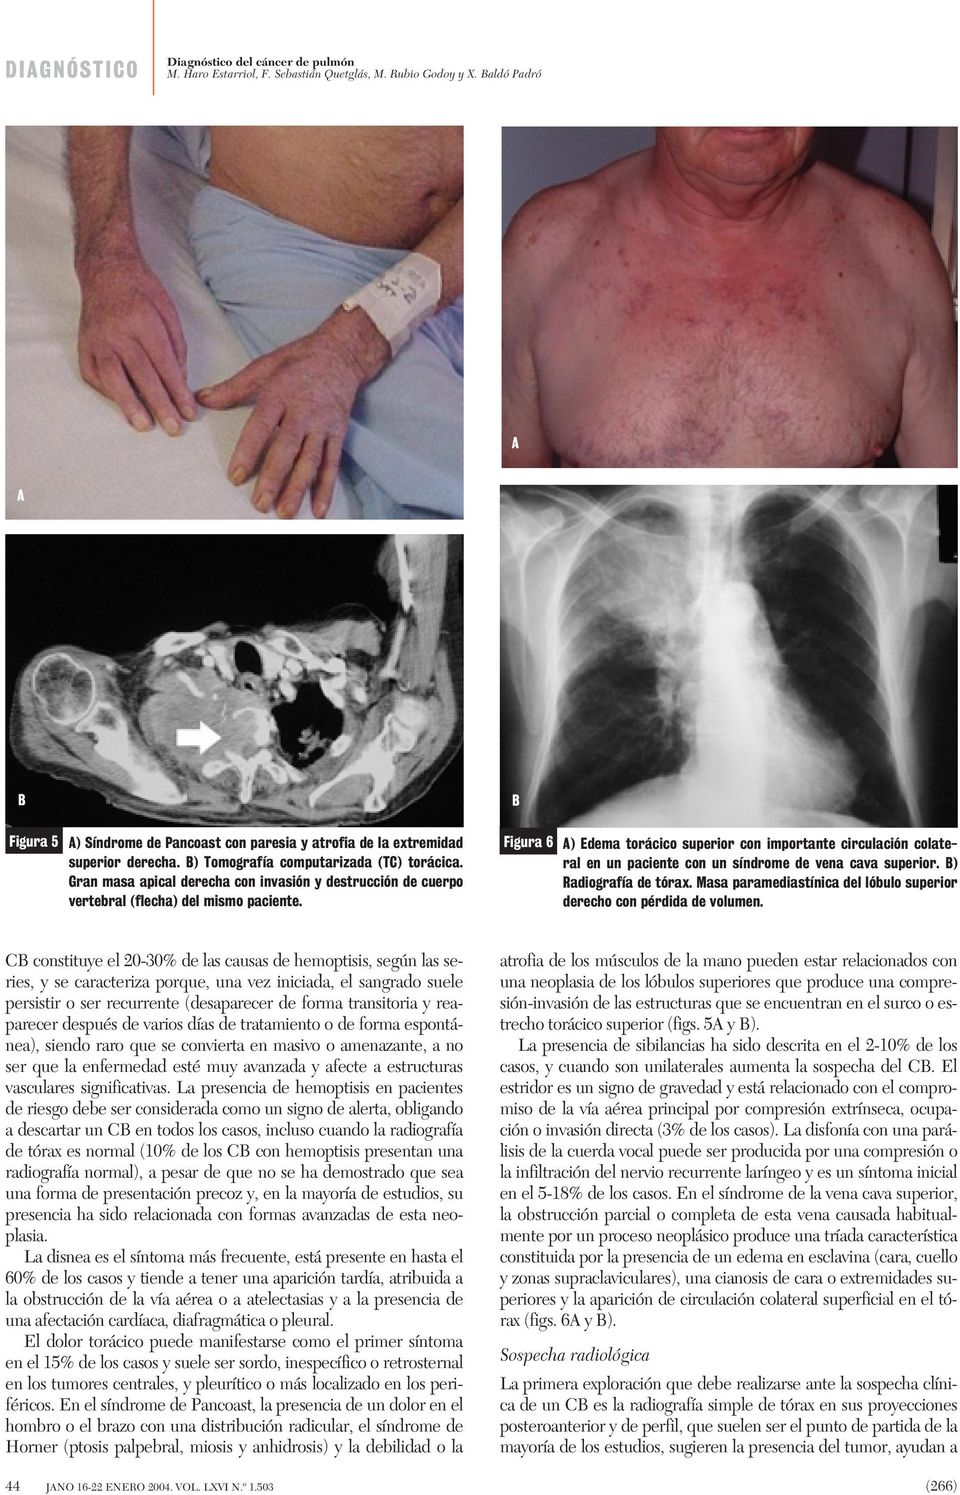 B Figura 6 A) Edema torácico superior con importante circulación colateral en un paciente con un síndrome de vena cava superior. B) Radiografía de tórax.